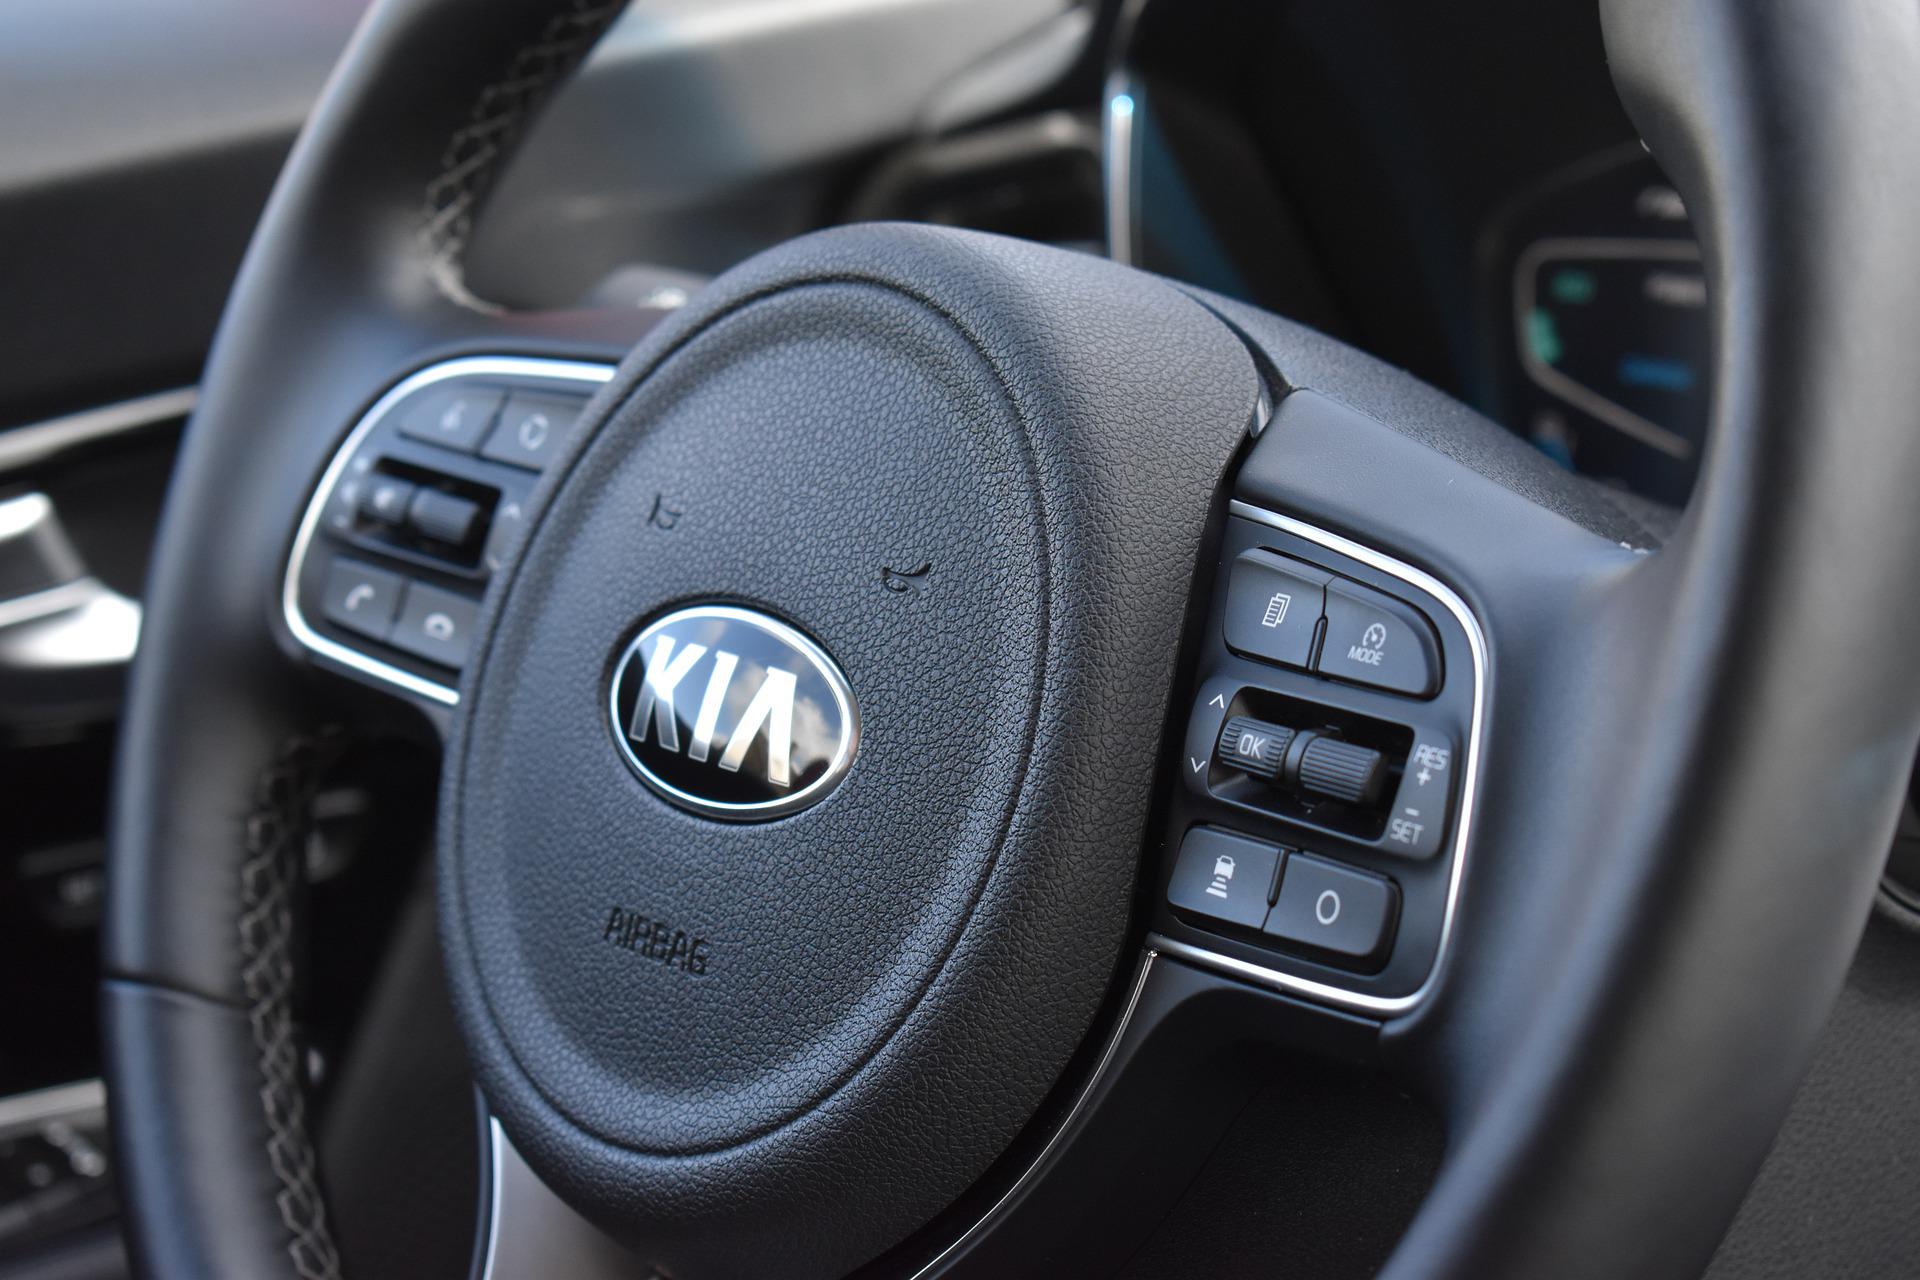 A Kia steering wheel